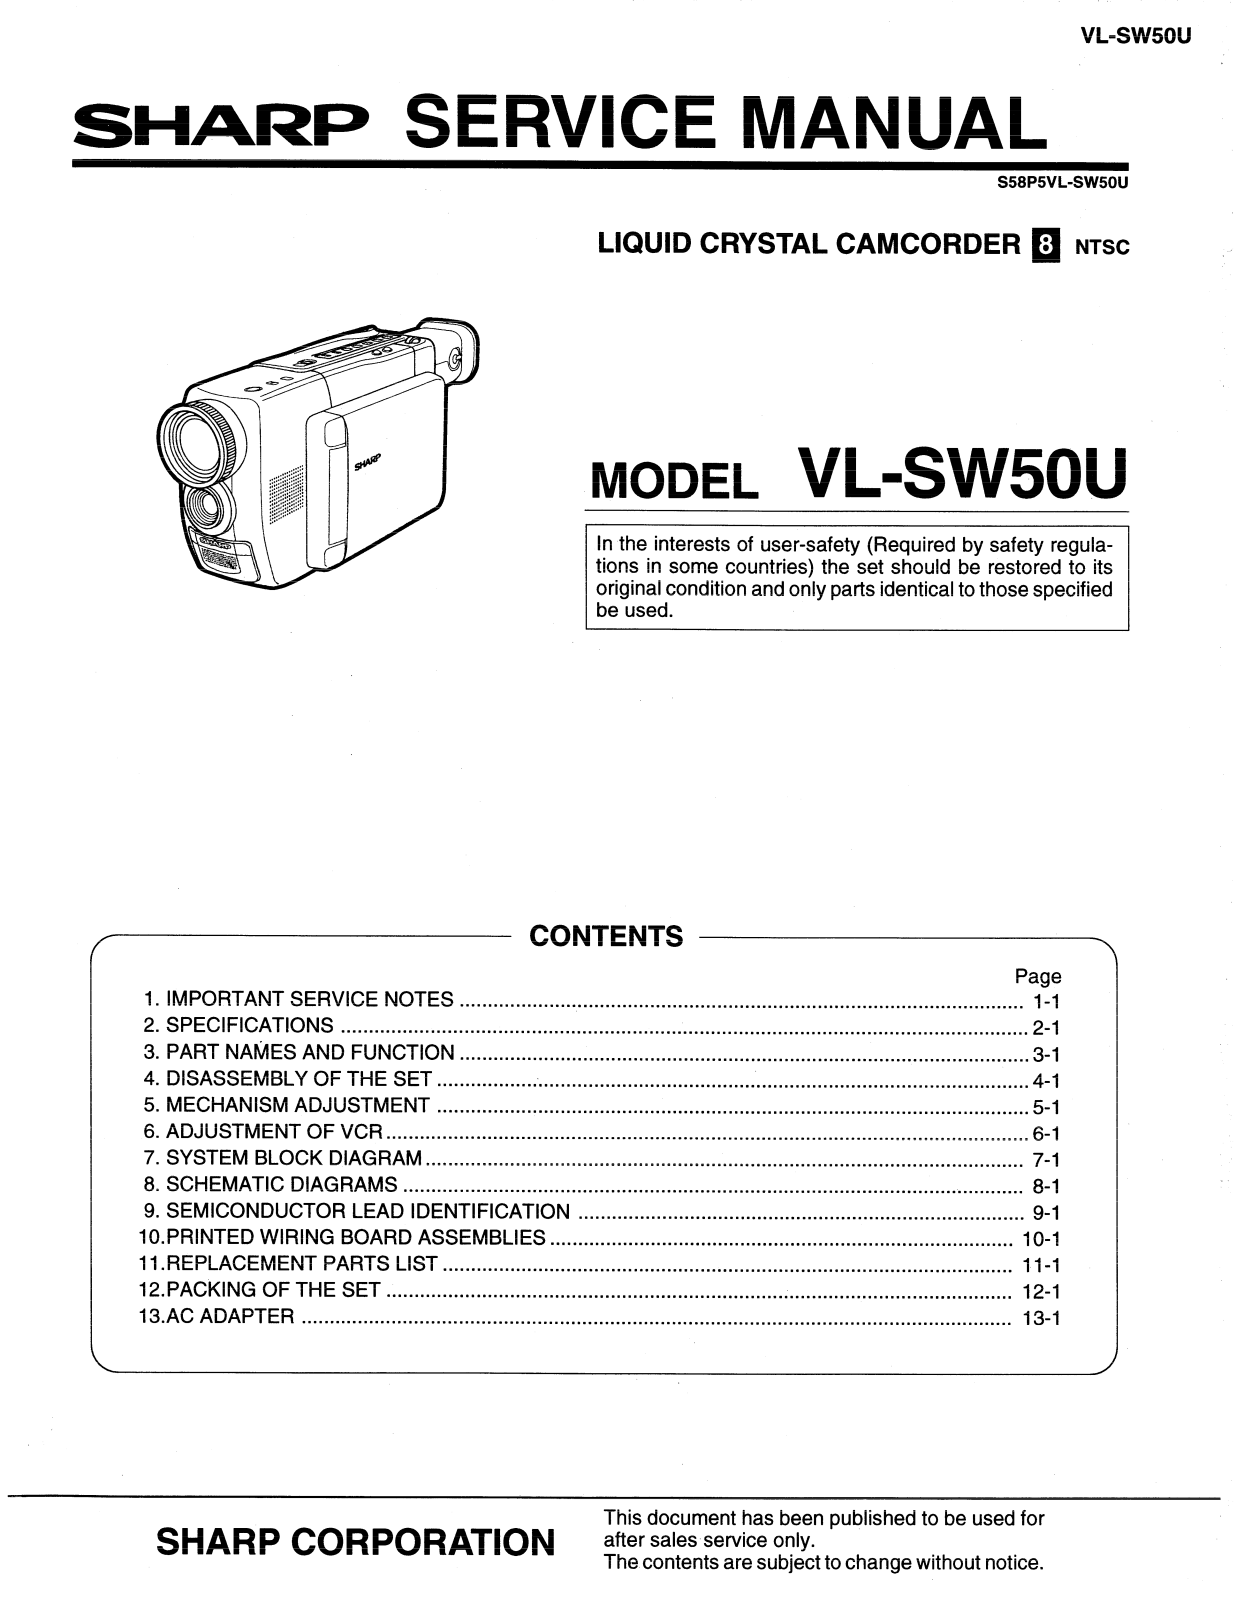 SHARP VL-SW50, VL-SW50U Service Manual